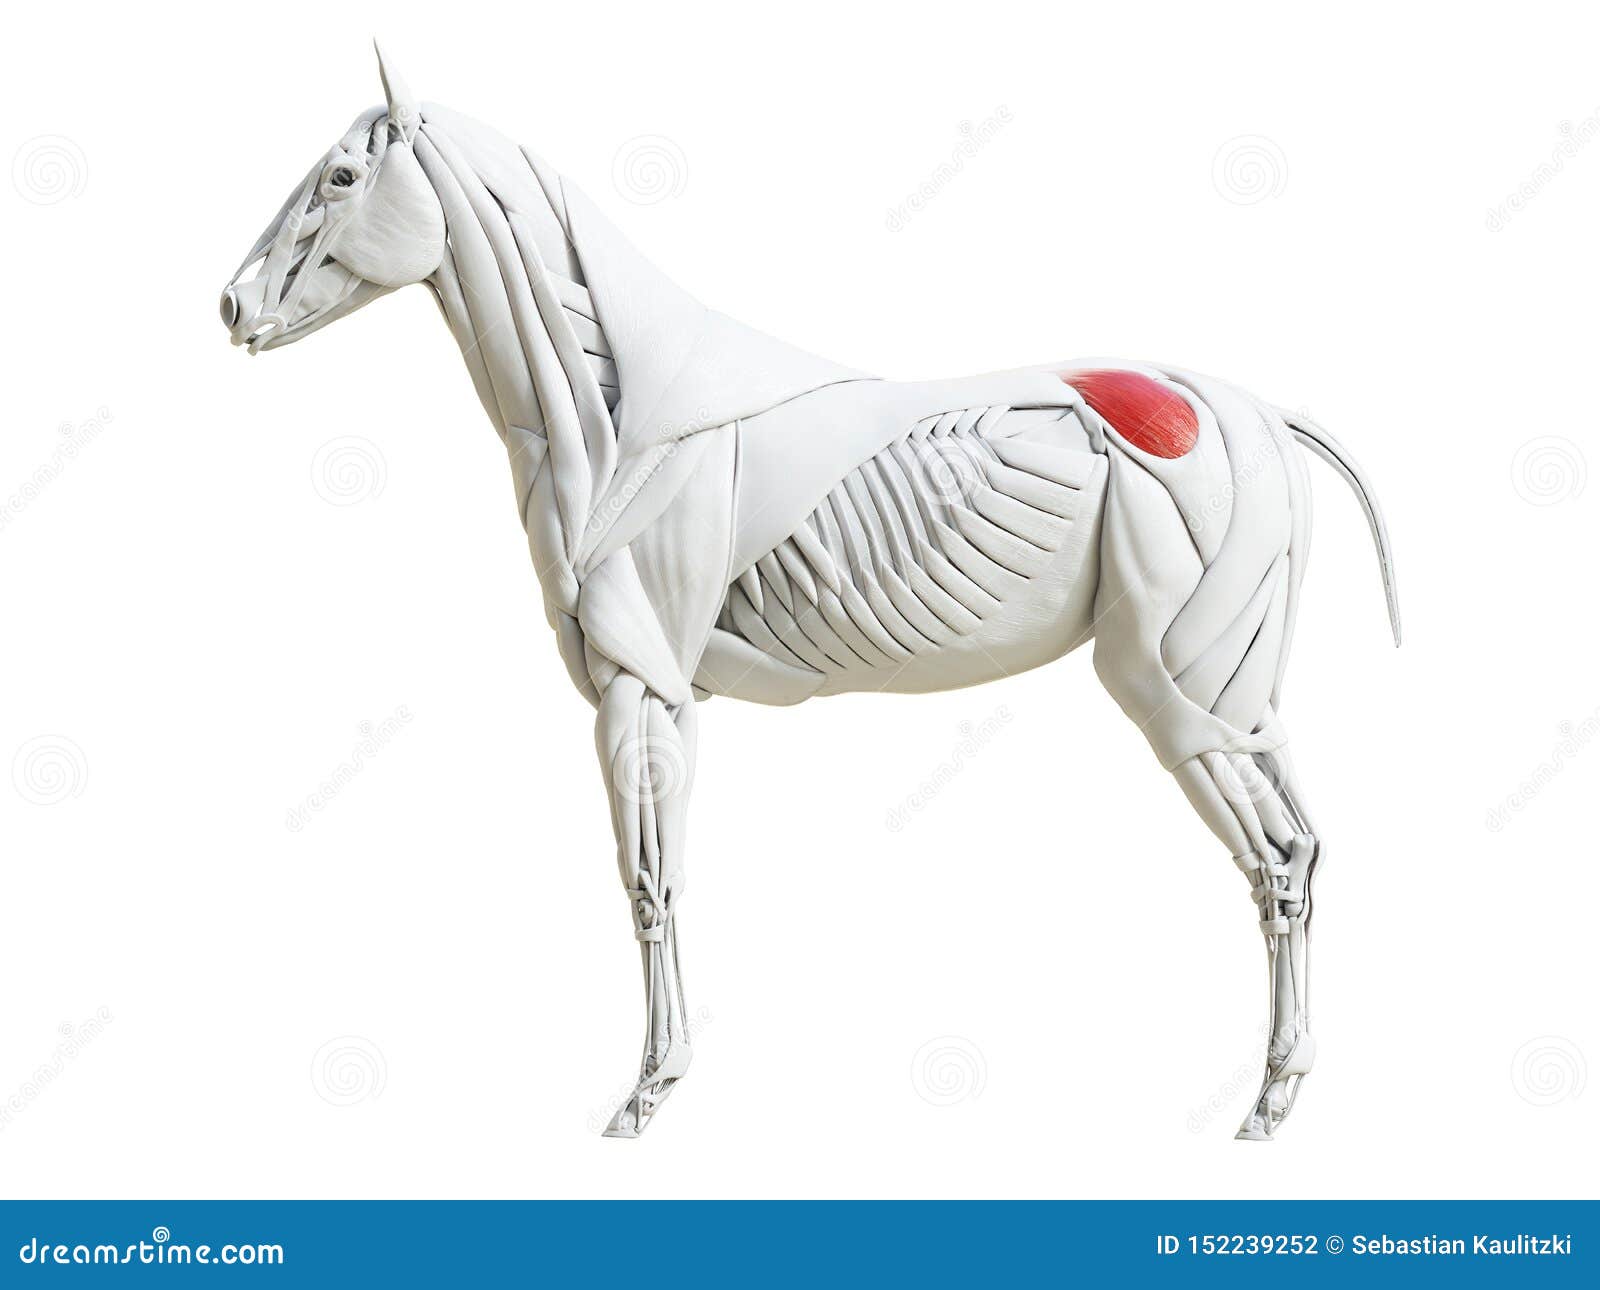 the equine muscle anatomy - gluteus medius